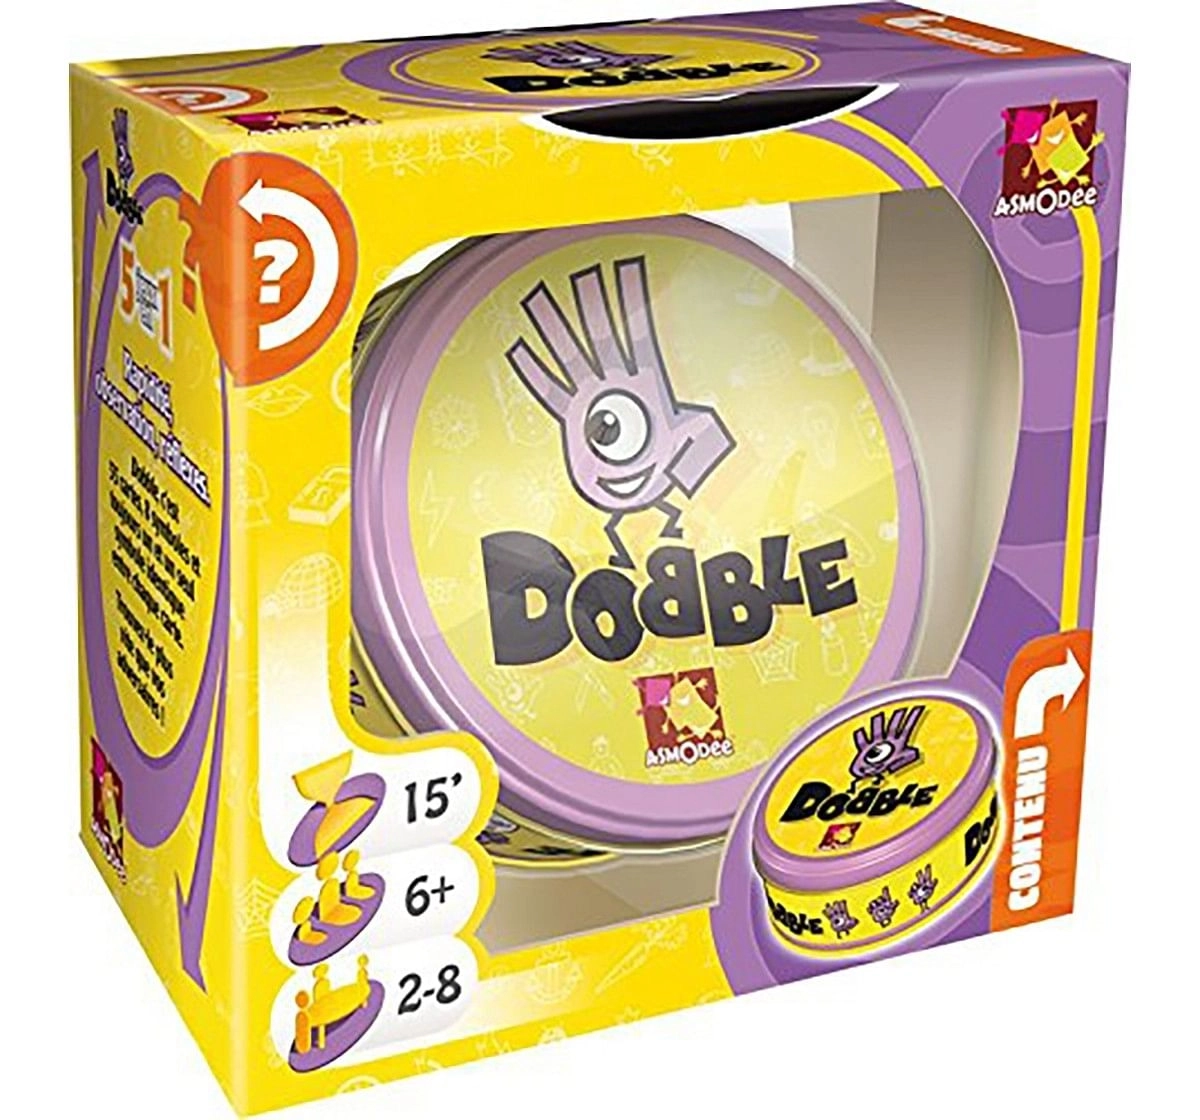 Funskool-Asmodee Dobble, Multicolor Games for Kids age 6Y+ 